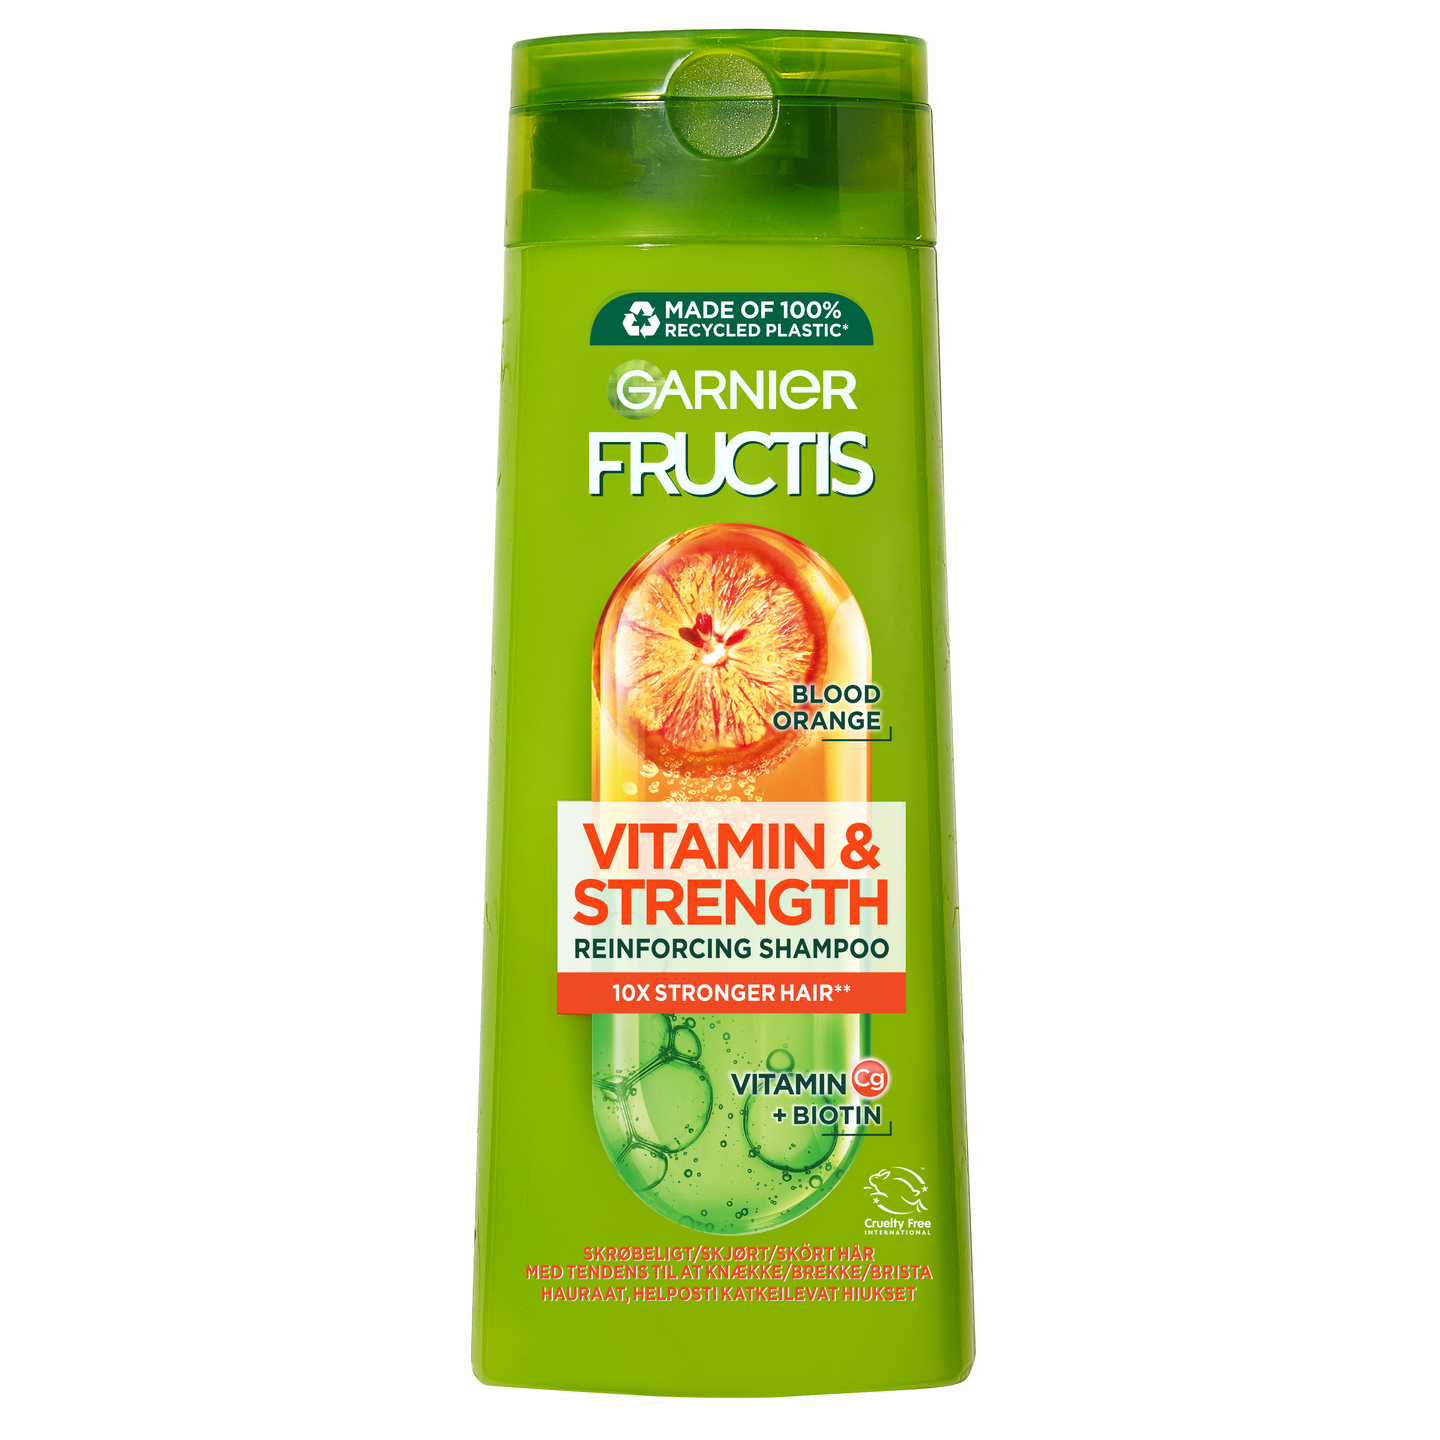 Garnier Fructis Vitamin & Strength shampoo hauraille, helposti katkeileville hiuksille 250ml